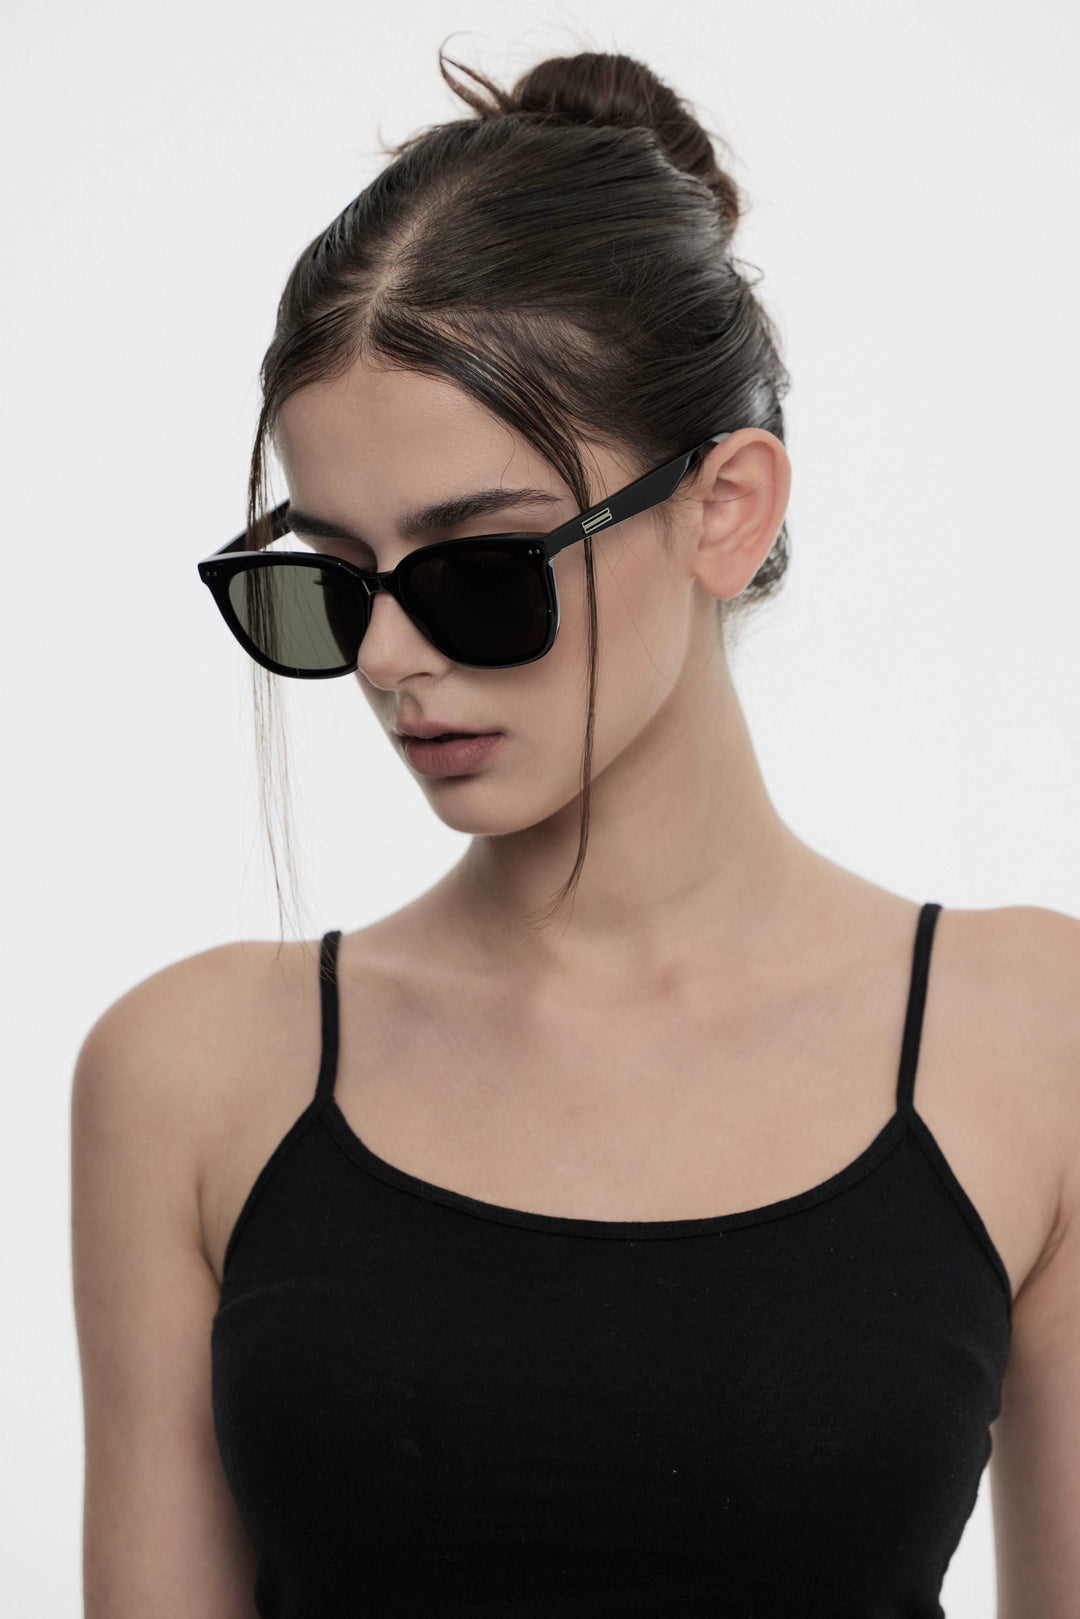 Model of her side face looking down wearing Artist Korean Fashion Sunglasses from Mercury Retrograde